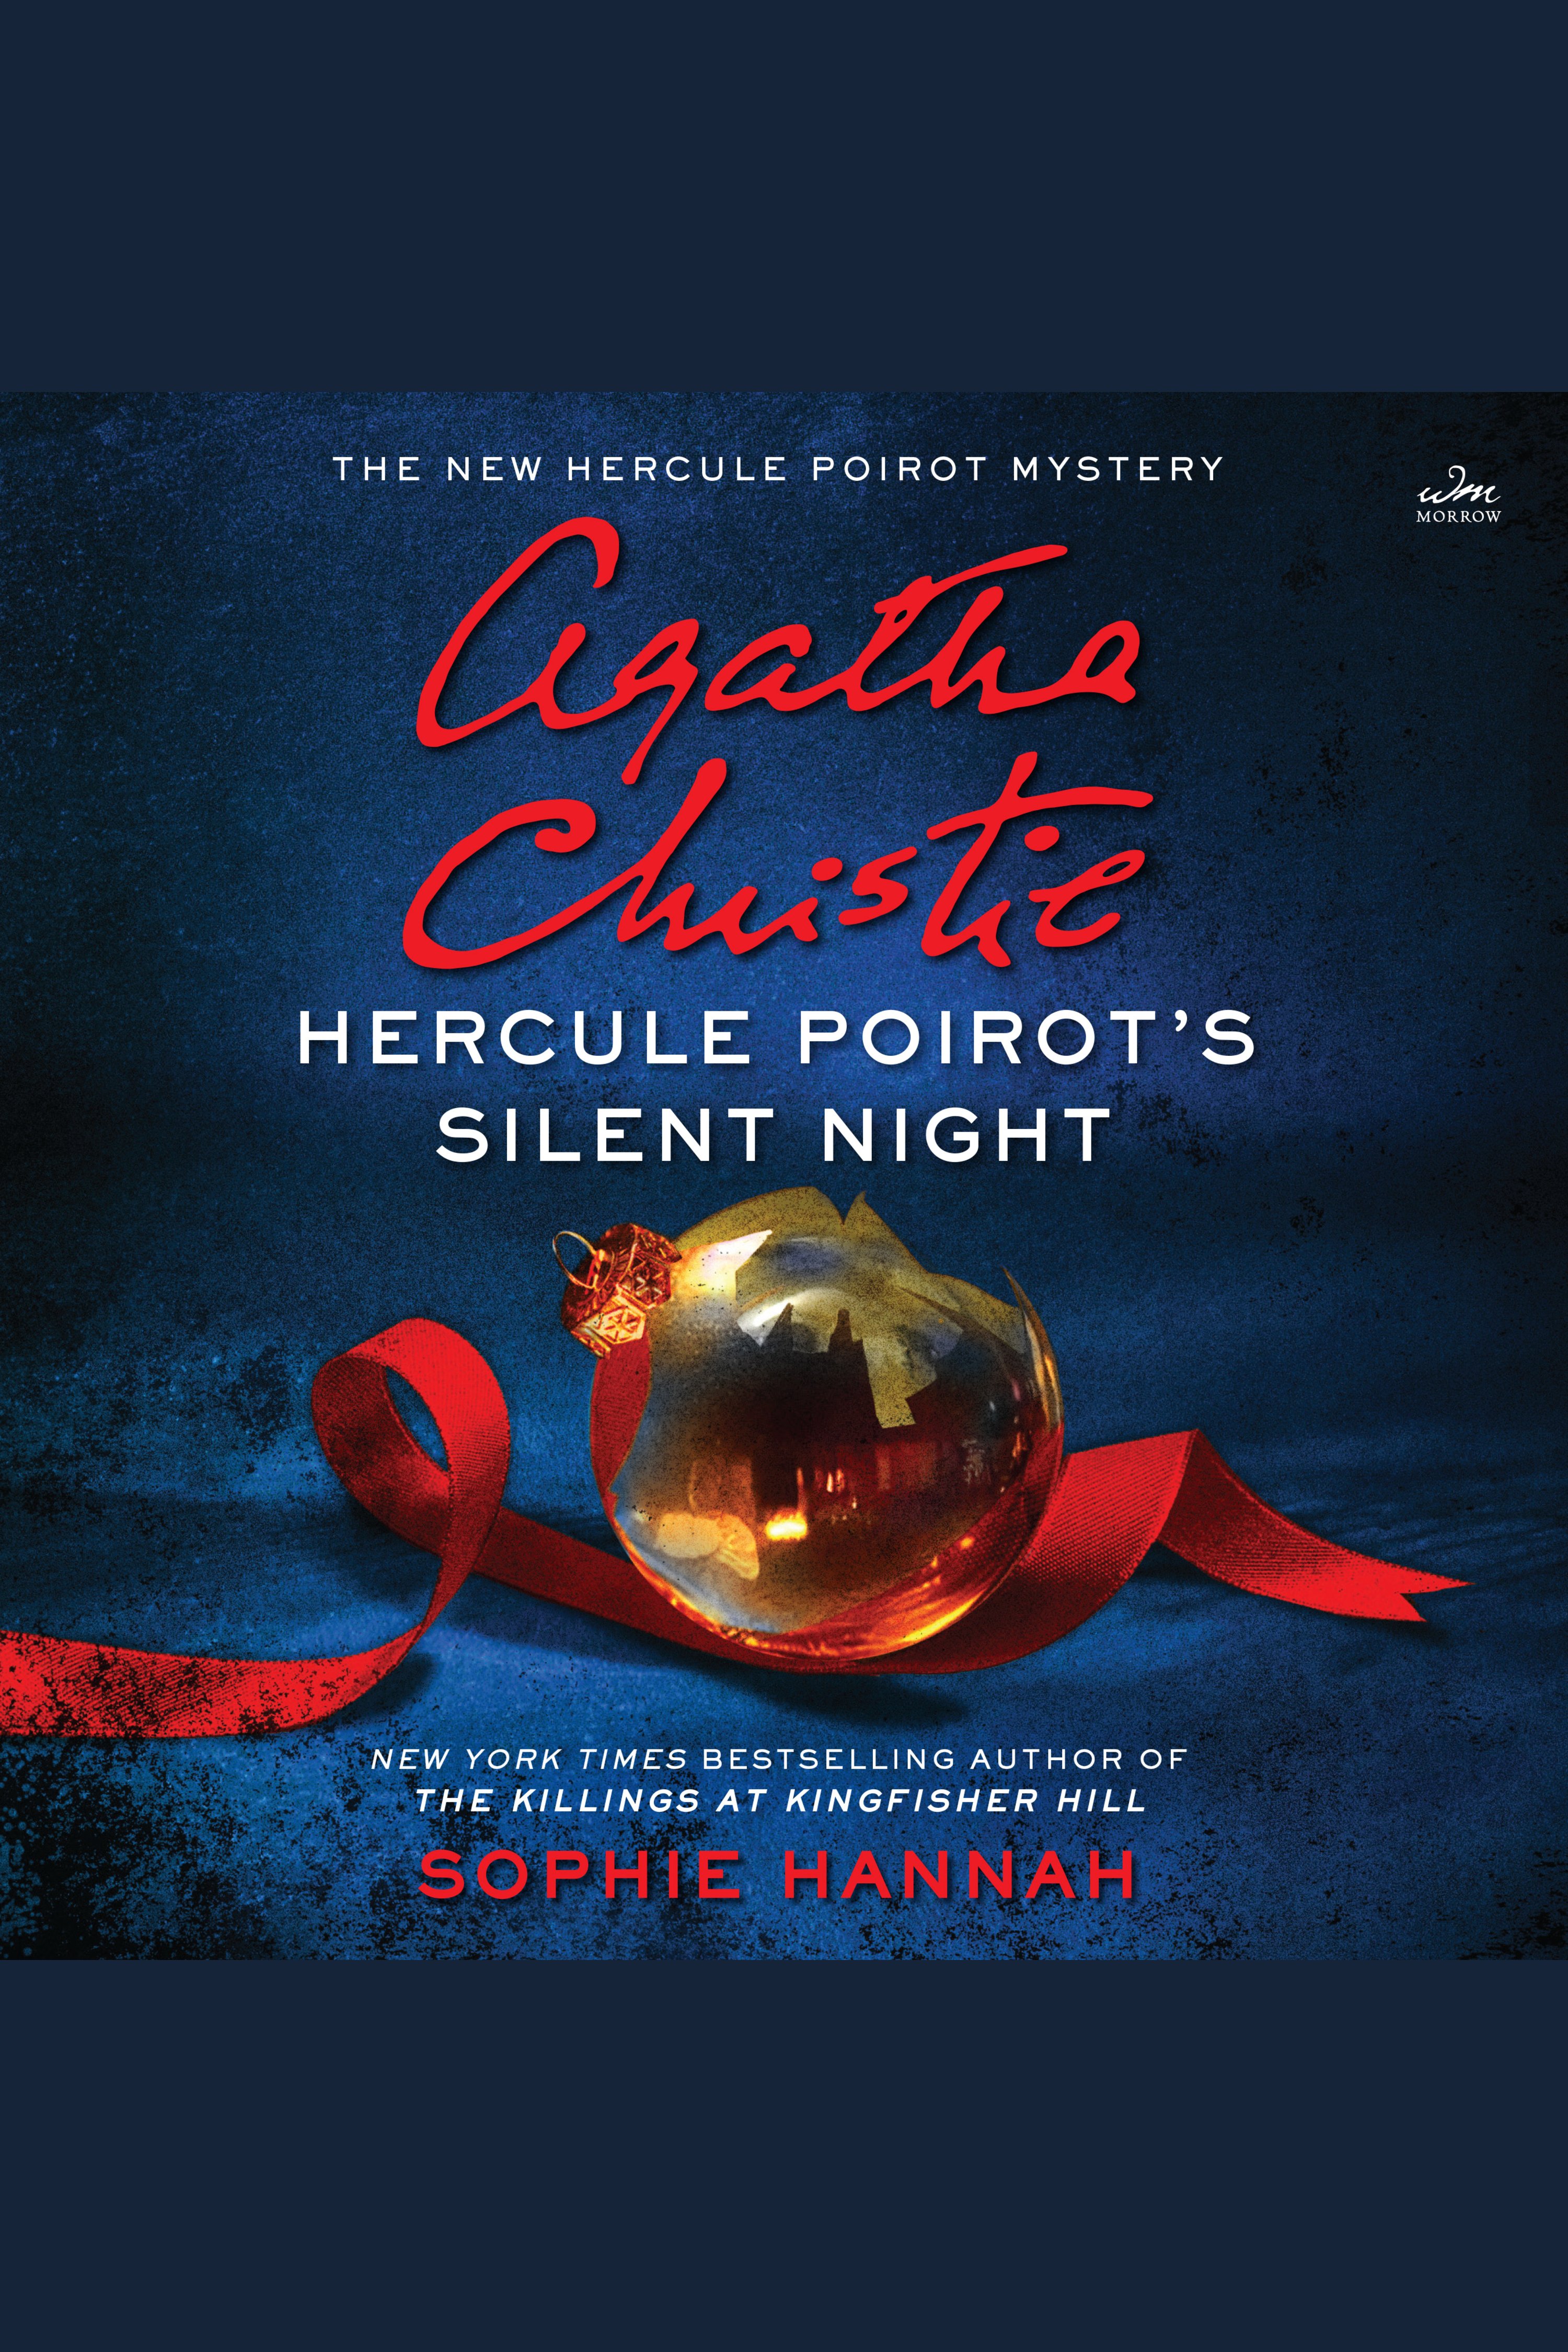 Hercule Poirot's Silent Night the new Hercule Poirot mystery cover image